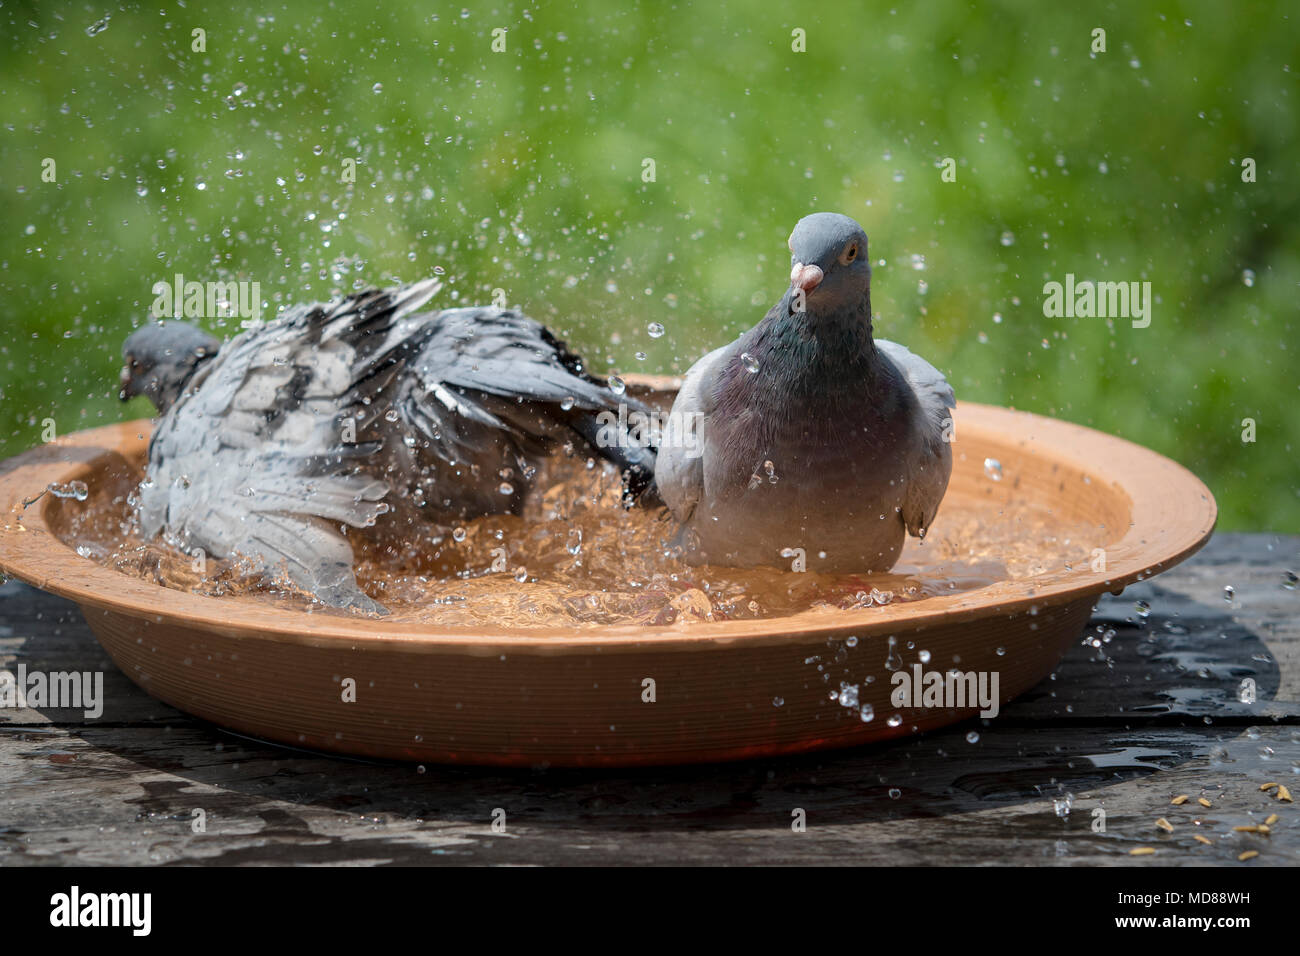 homing pigeon bird bathing in water bowl Stock Photo - Alamy